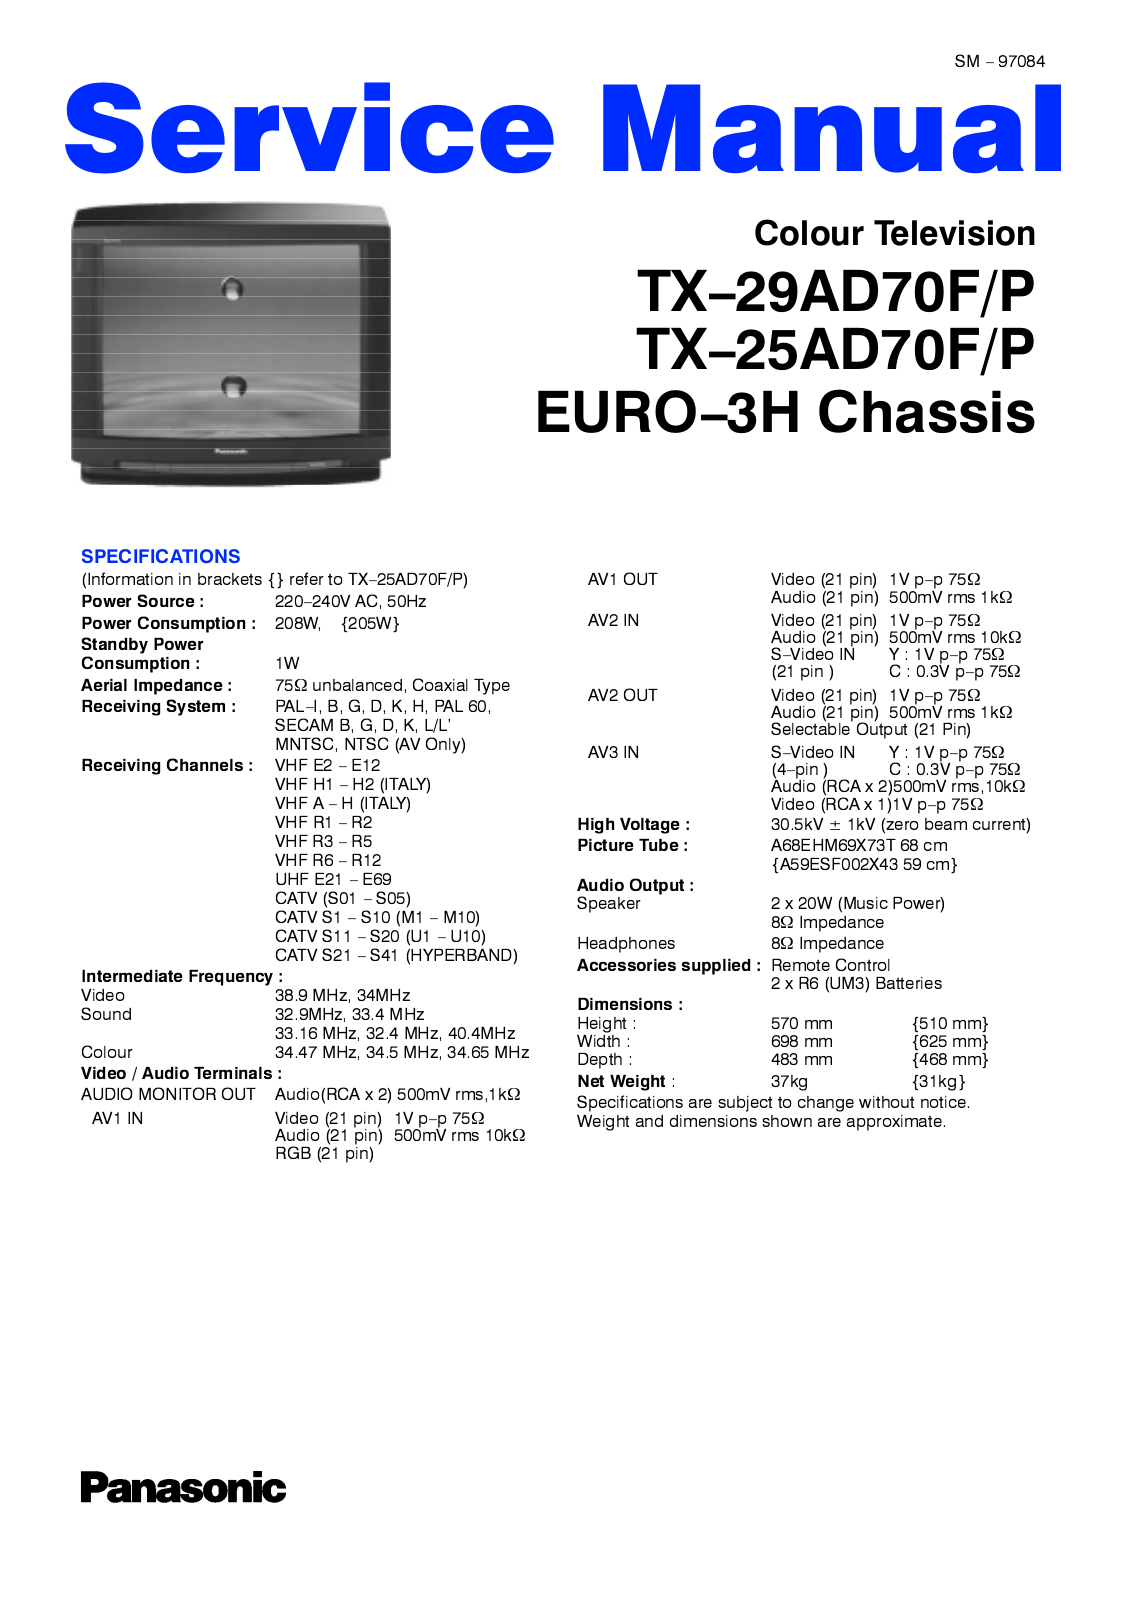 Panasonic TX-29AD70, TX-25AD70 Service Manual